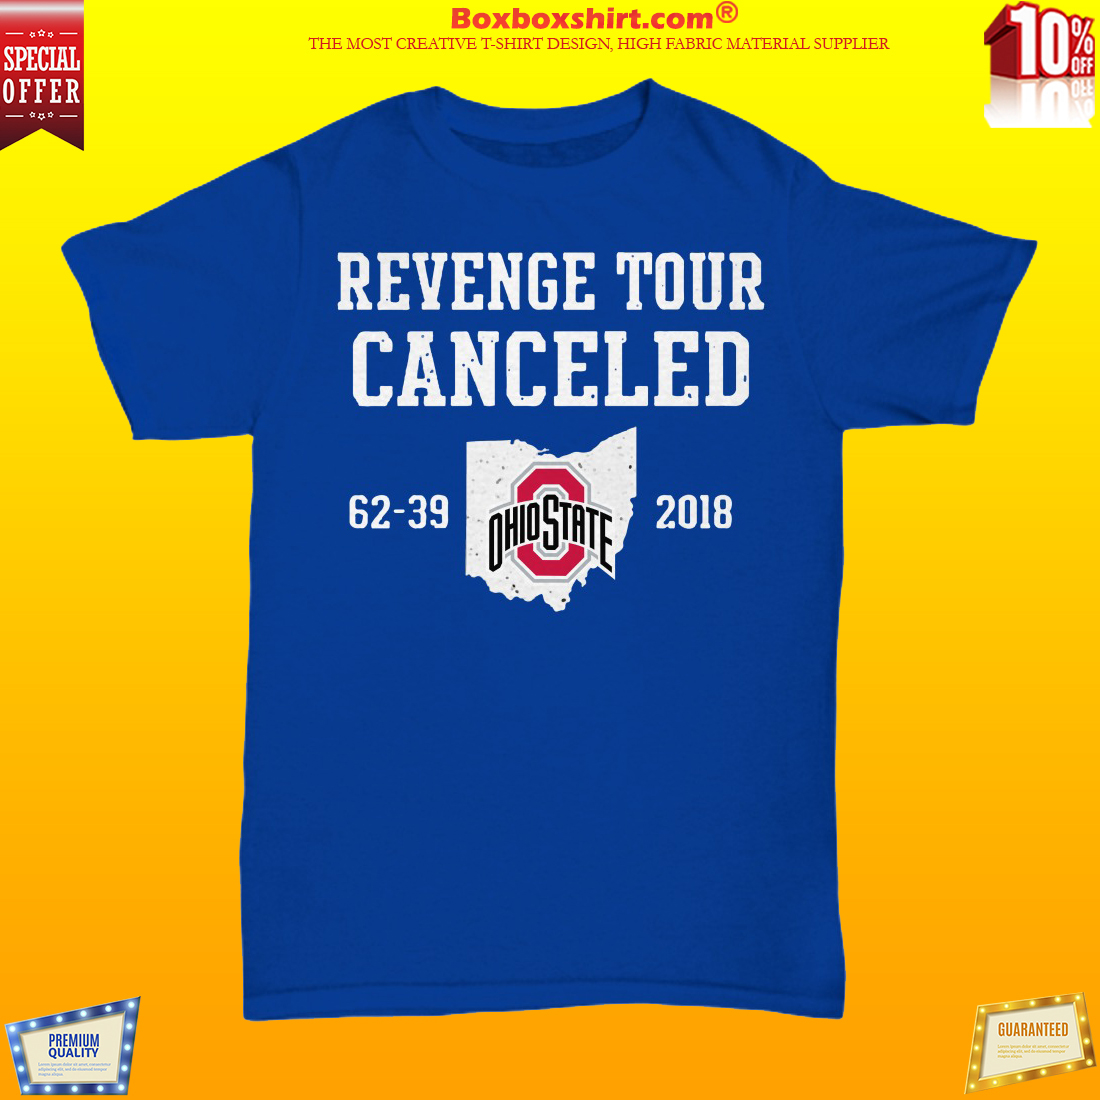 Ohio State revenge tour canceled shirt 2and hoodies 